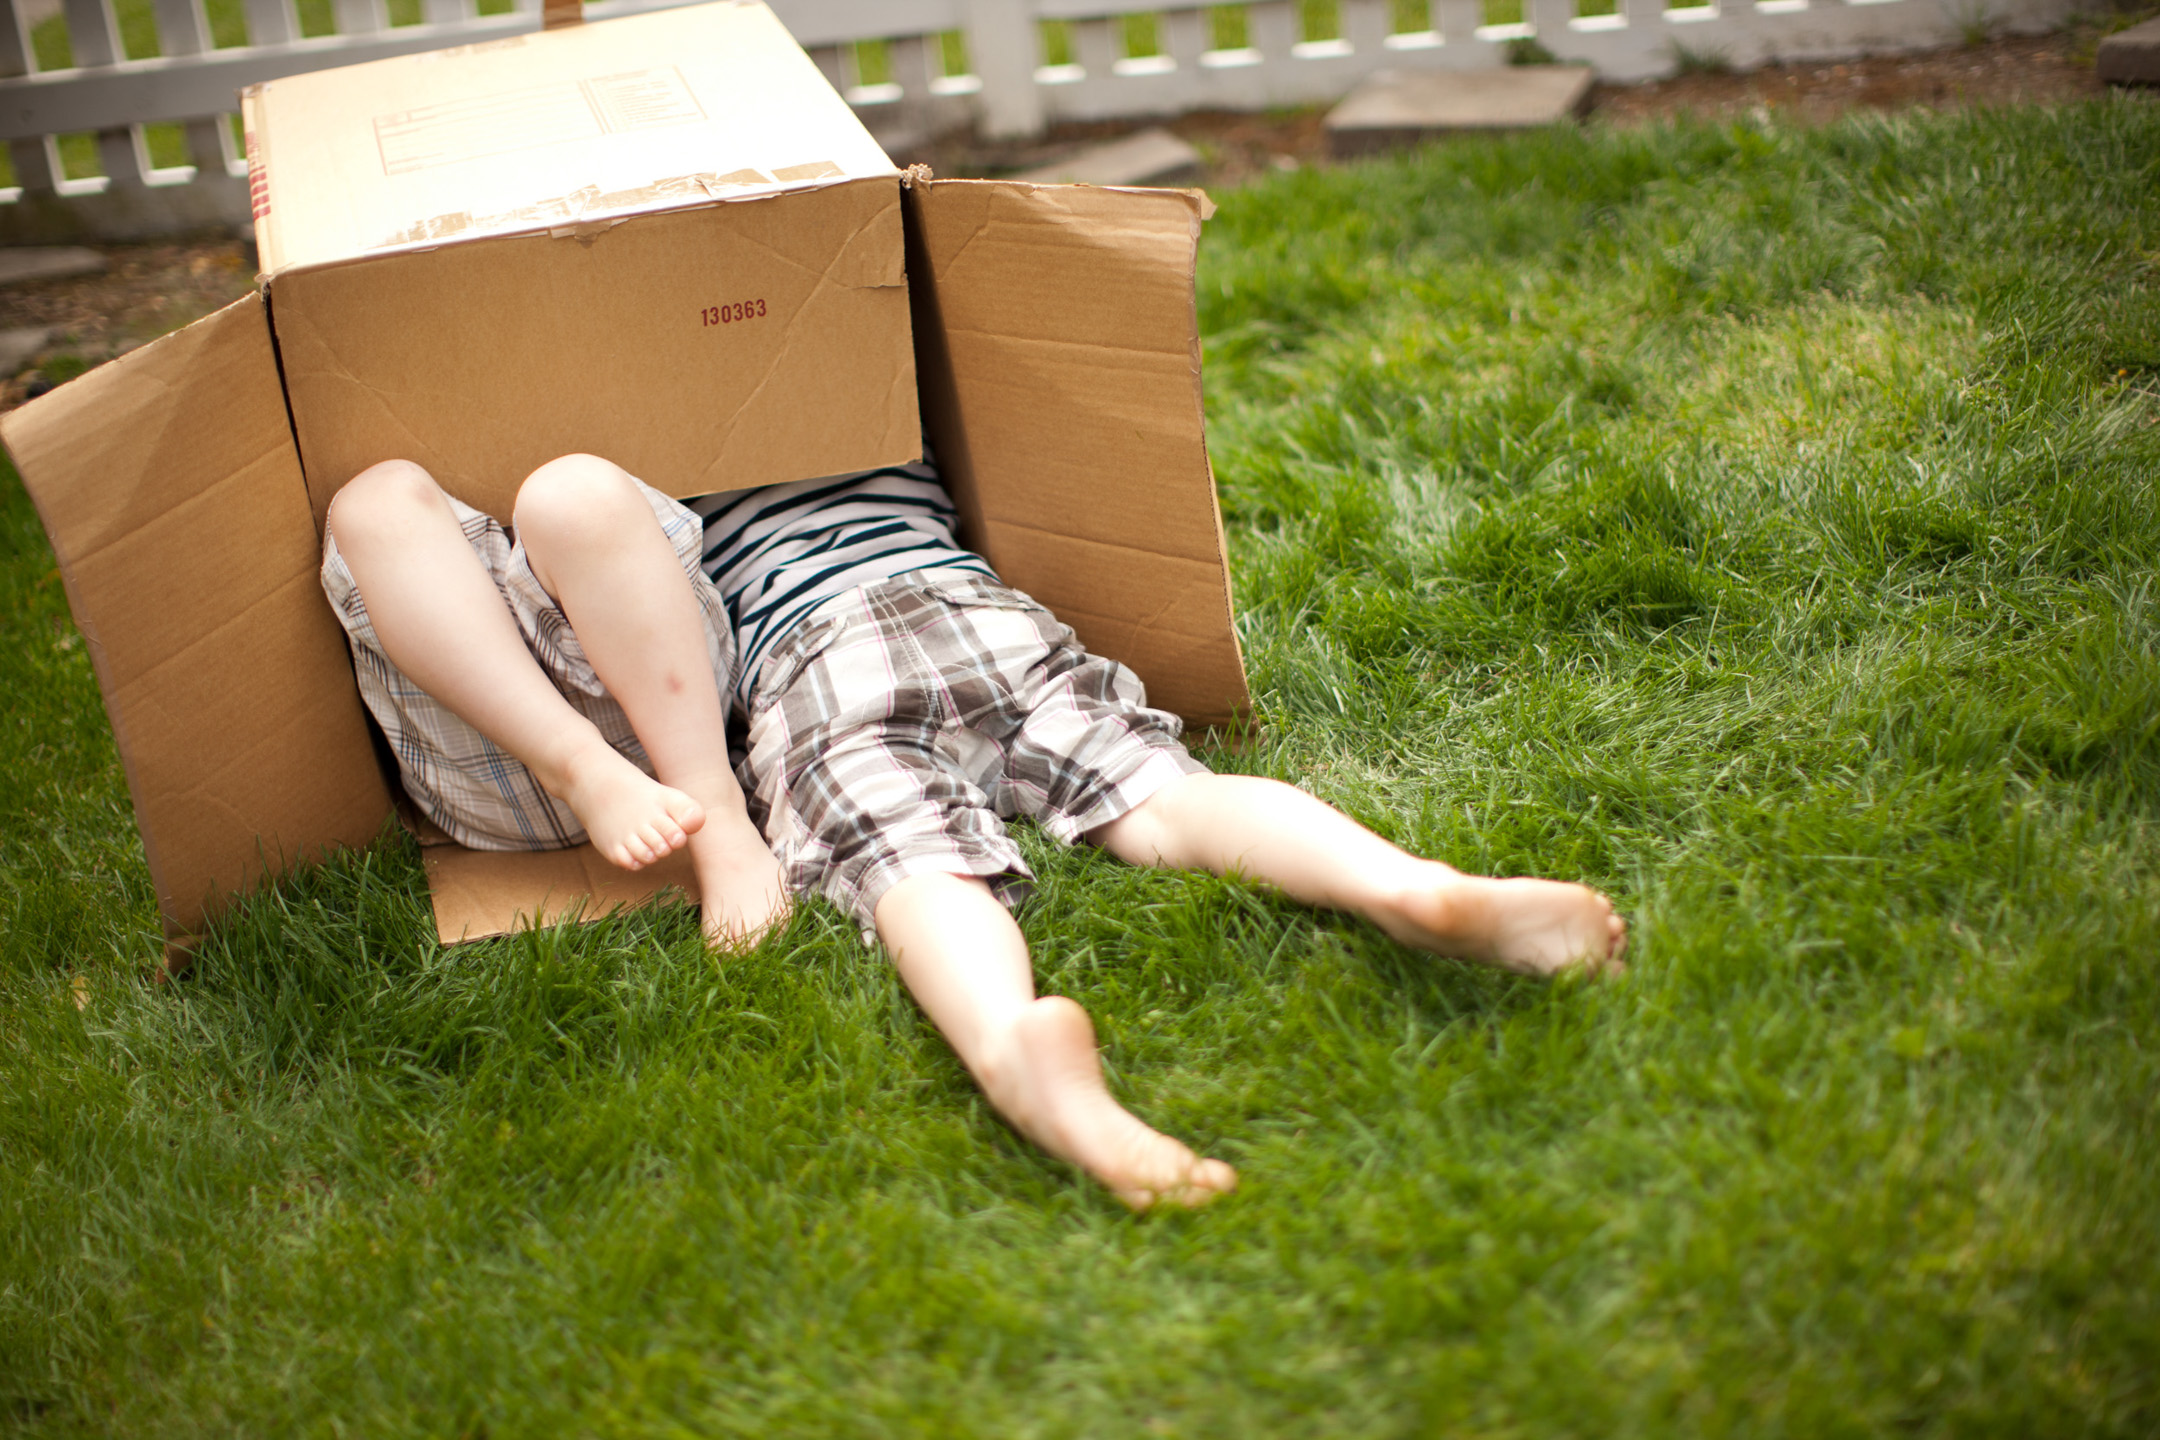 Two boys play in a cardboard box